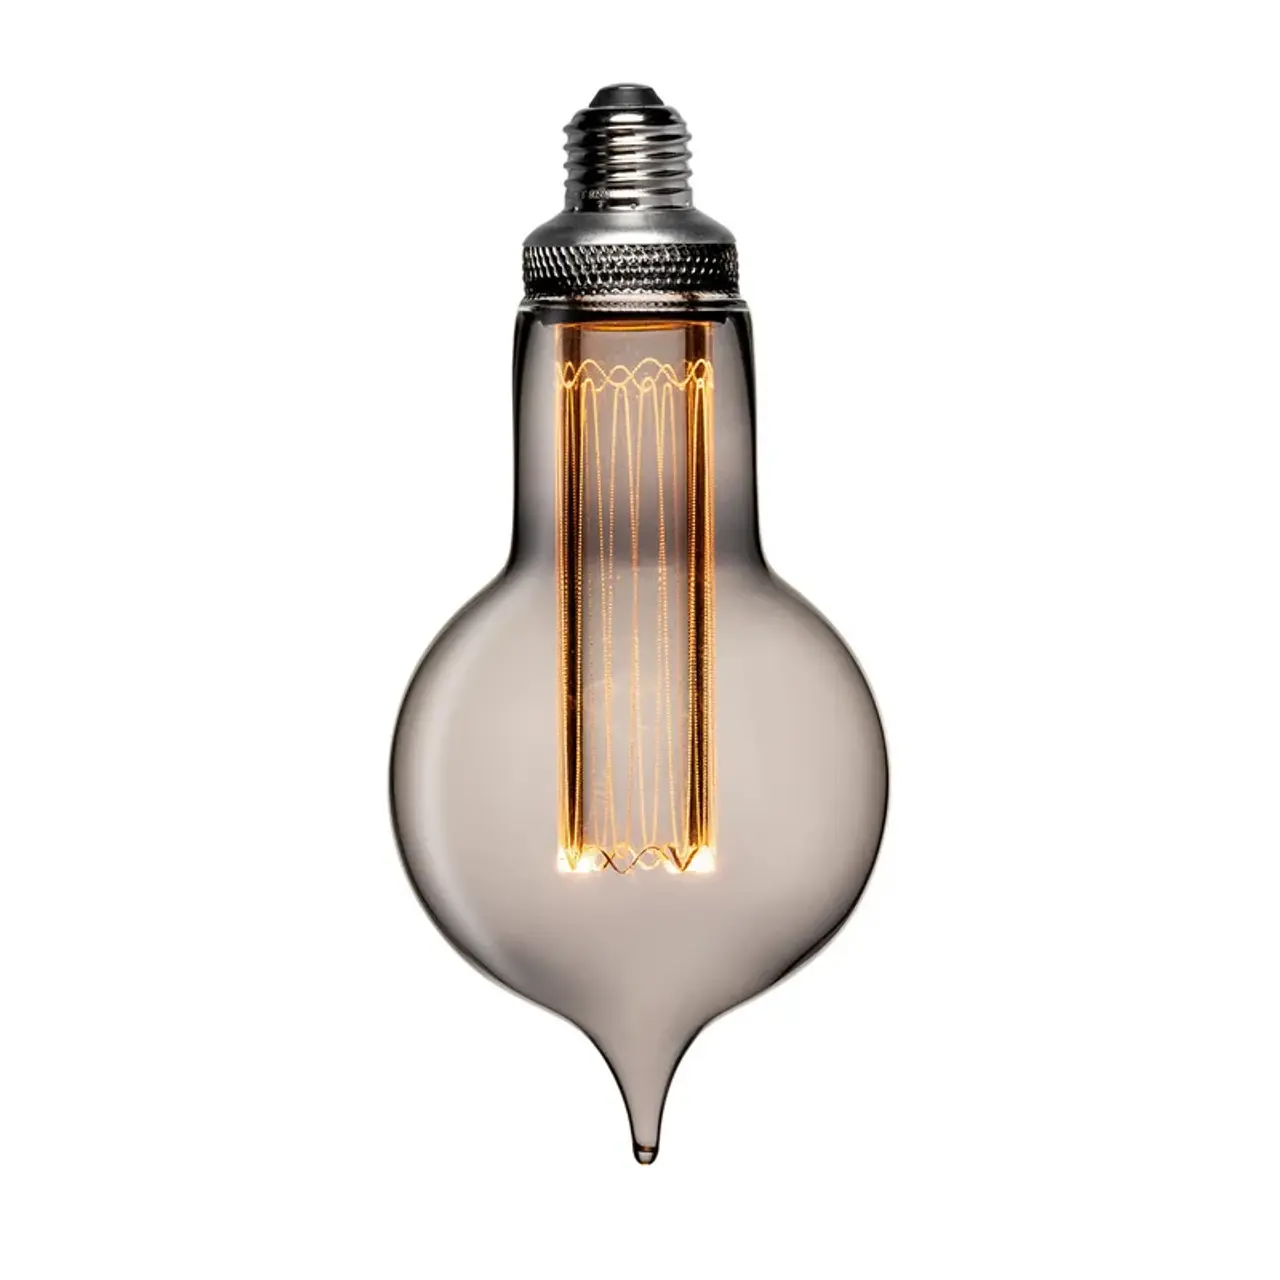 smoked edison bulb - What are Edison bulbs good for